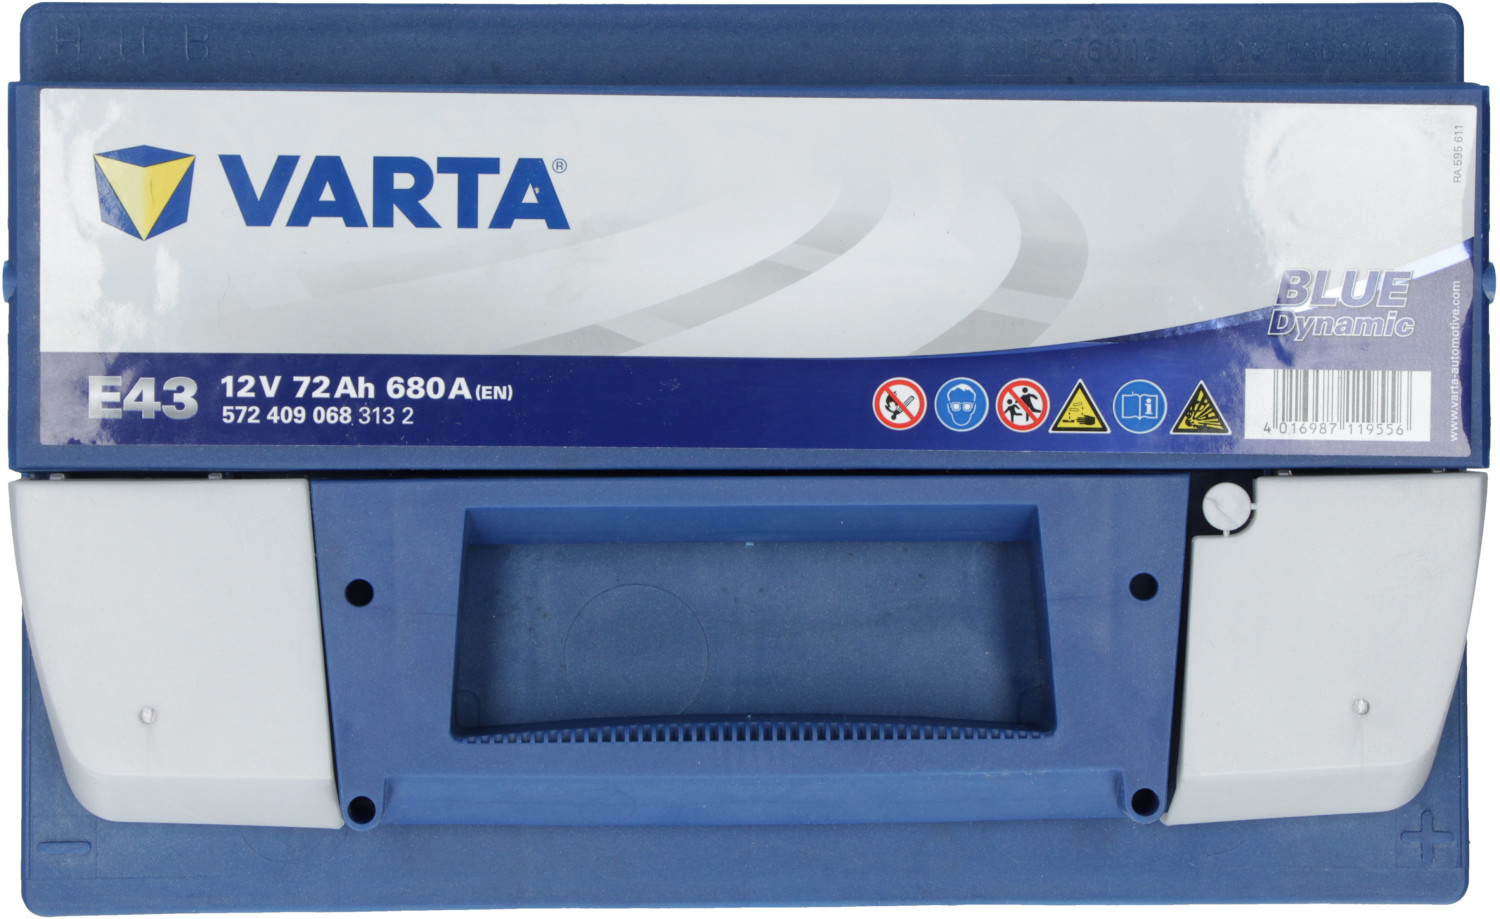 Varta lithium_cobalt, Blue Dynamic E43 Autobatterie 572 409 068, 12V, 72 Ah,  680 A : : Auto & Motorrad